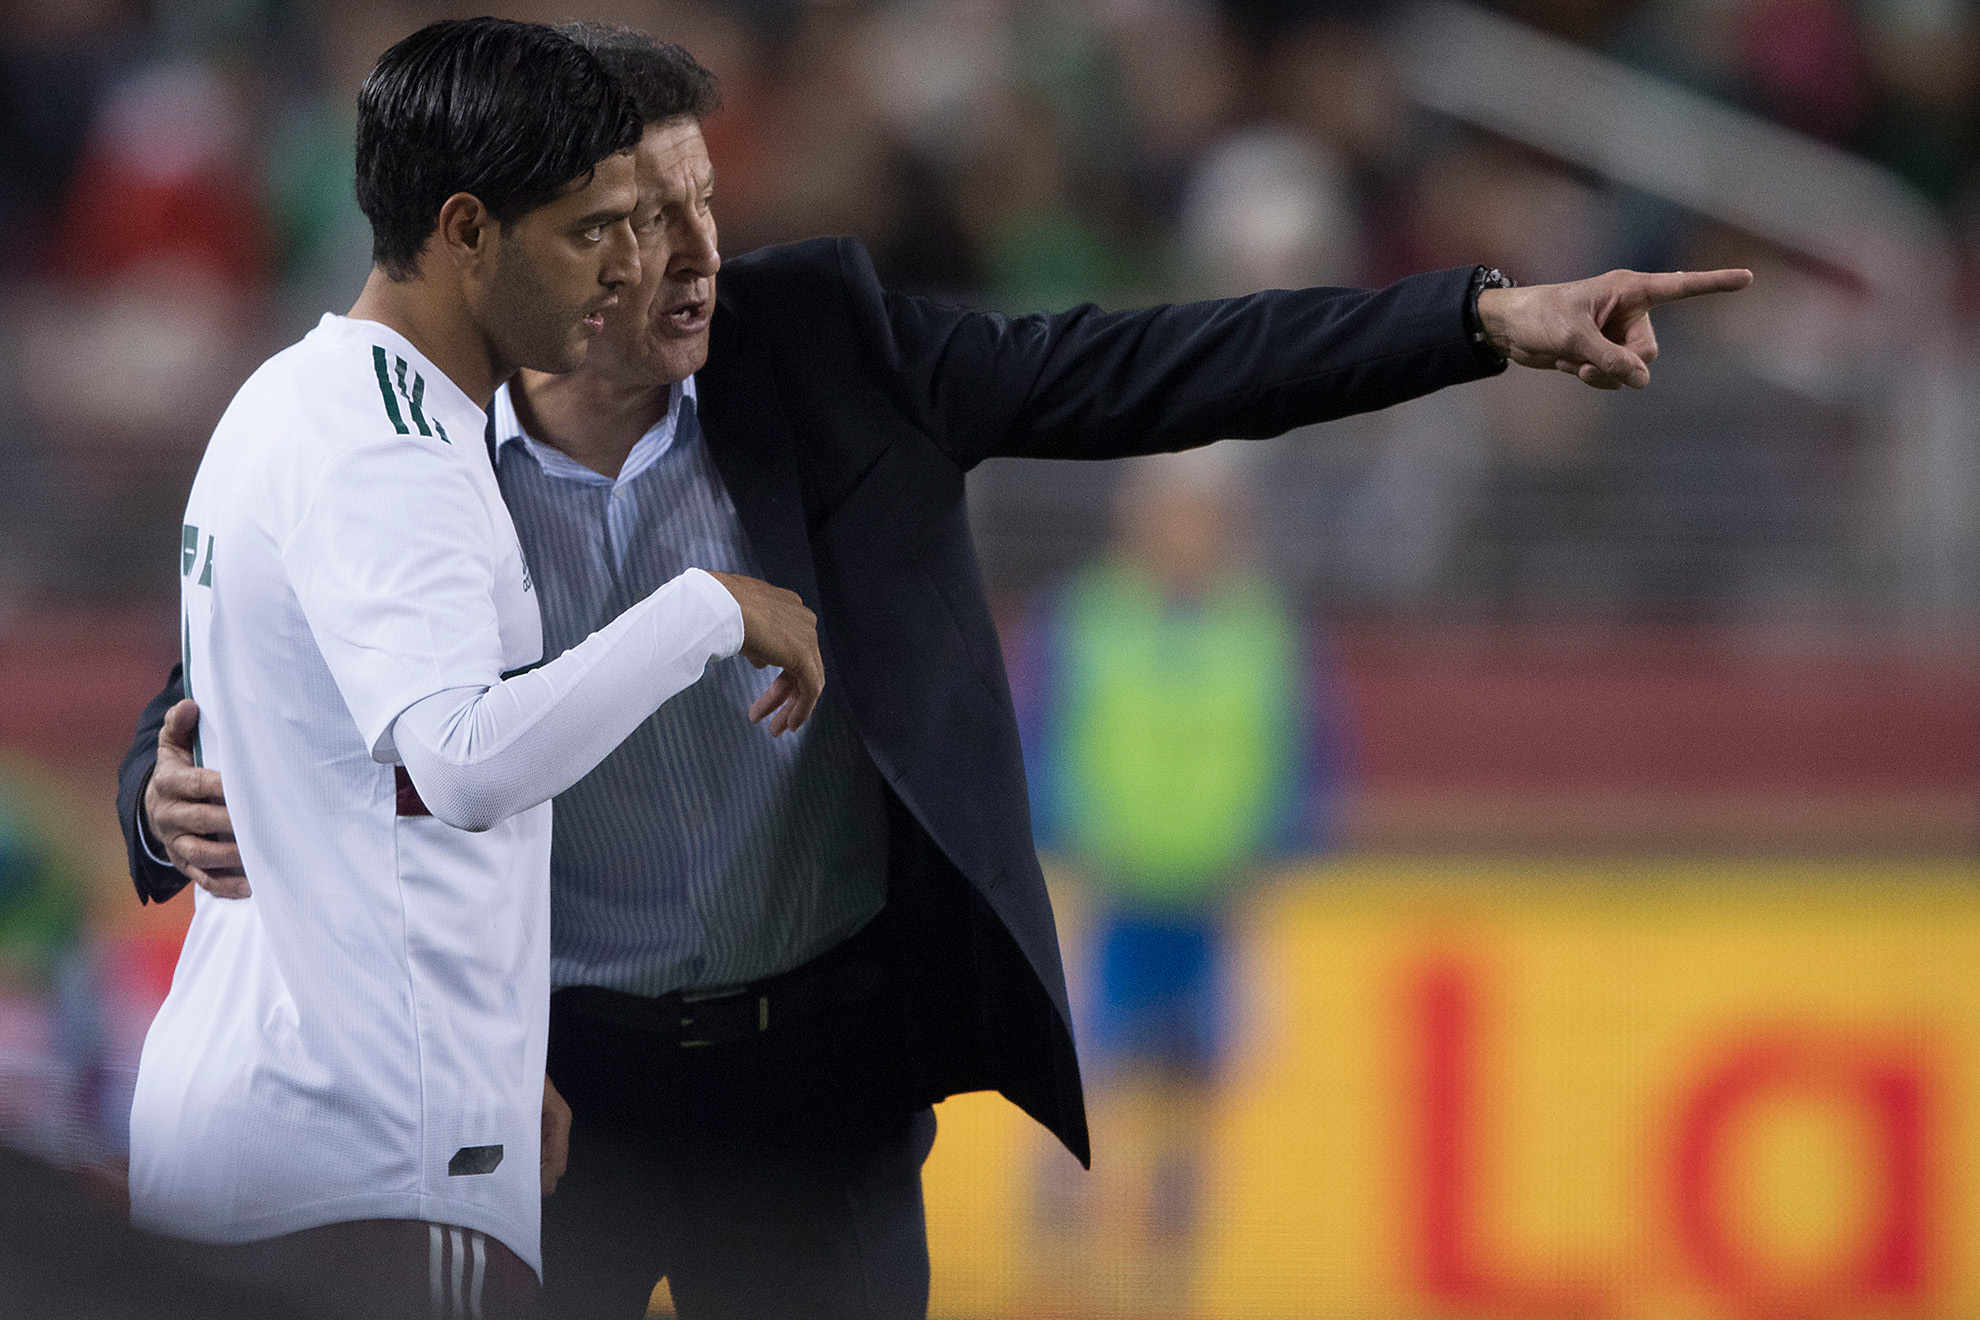 Juan Carlos Osorio destaca la técnica del jugador del LAFC. | Imago7